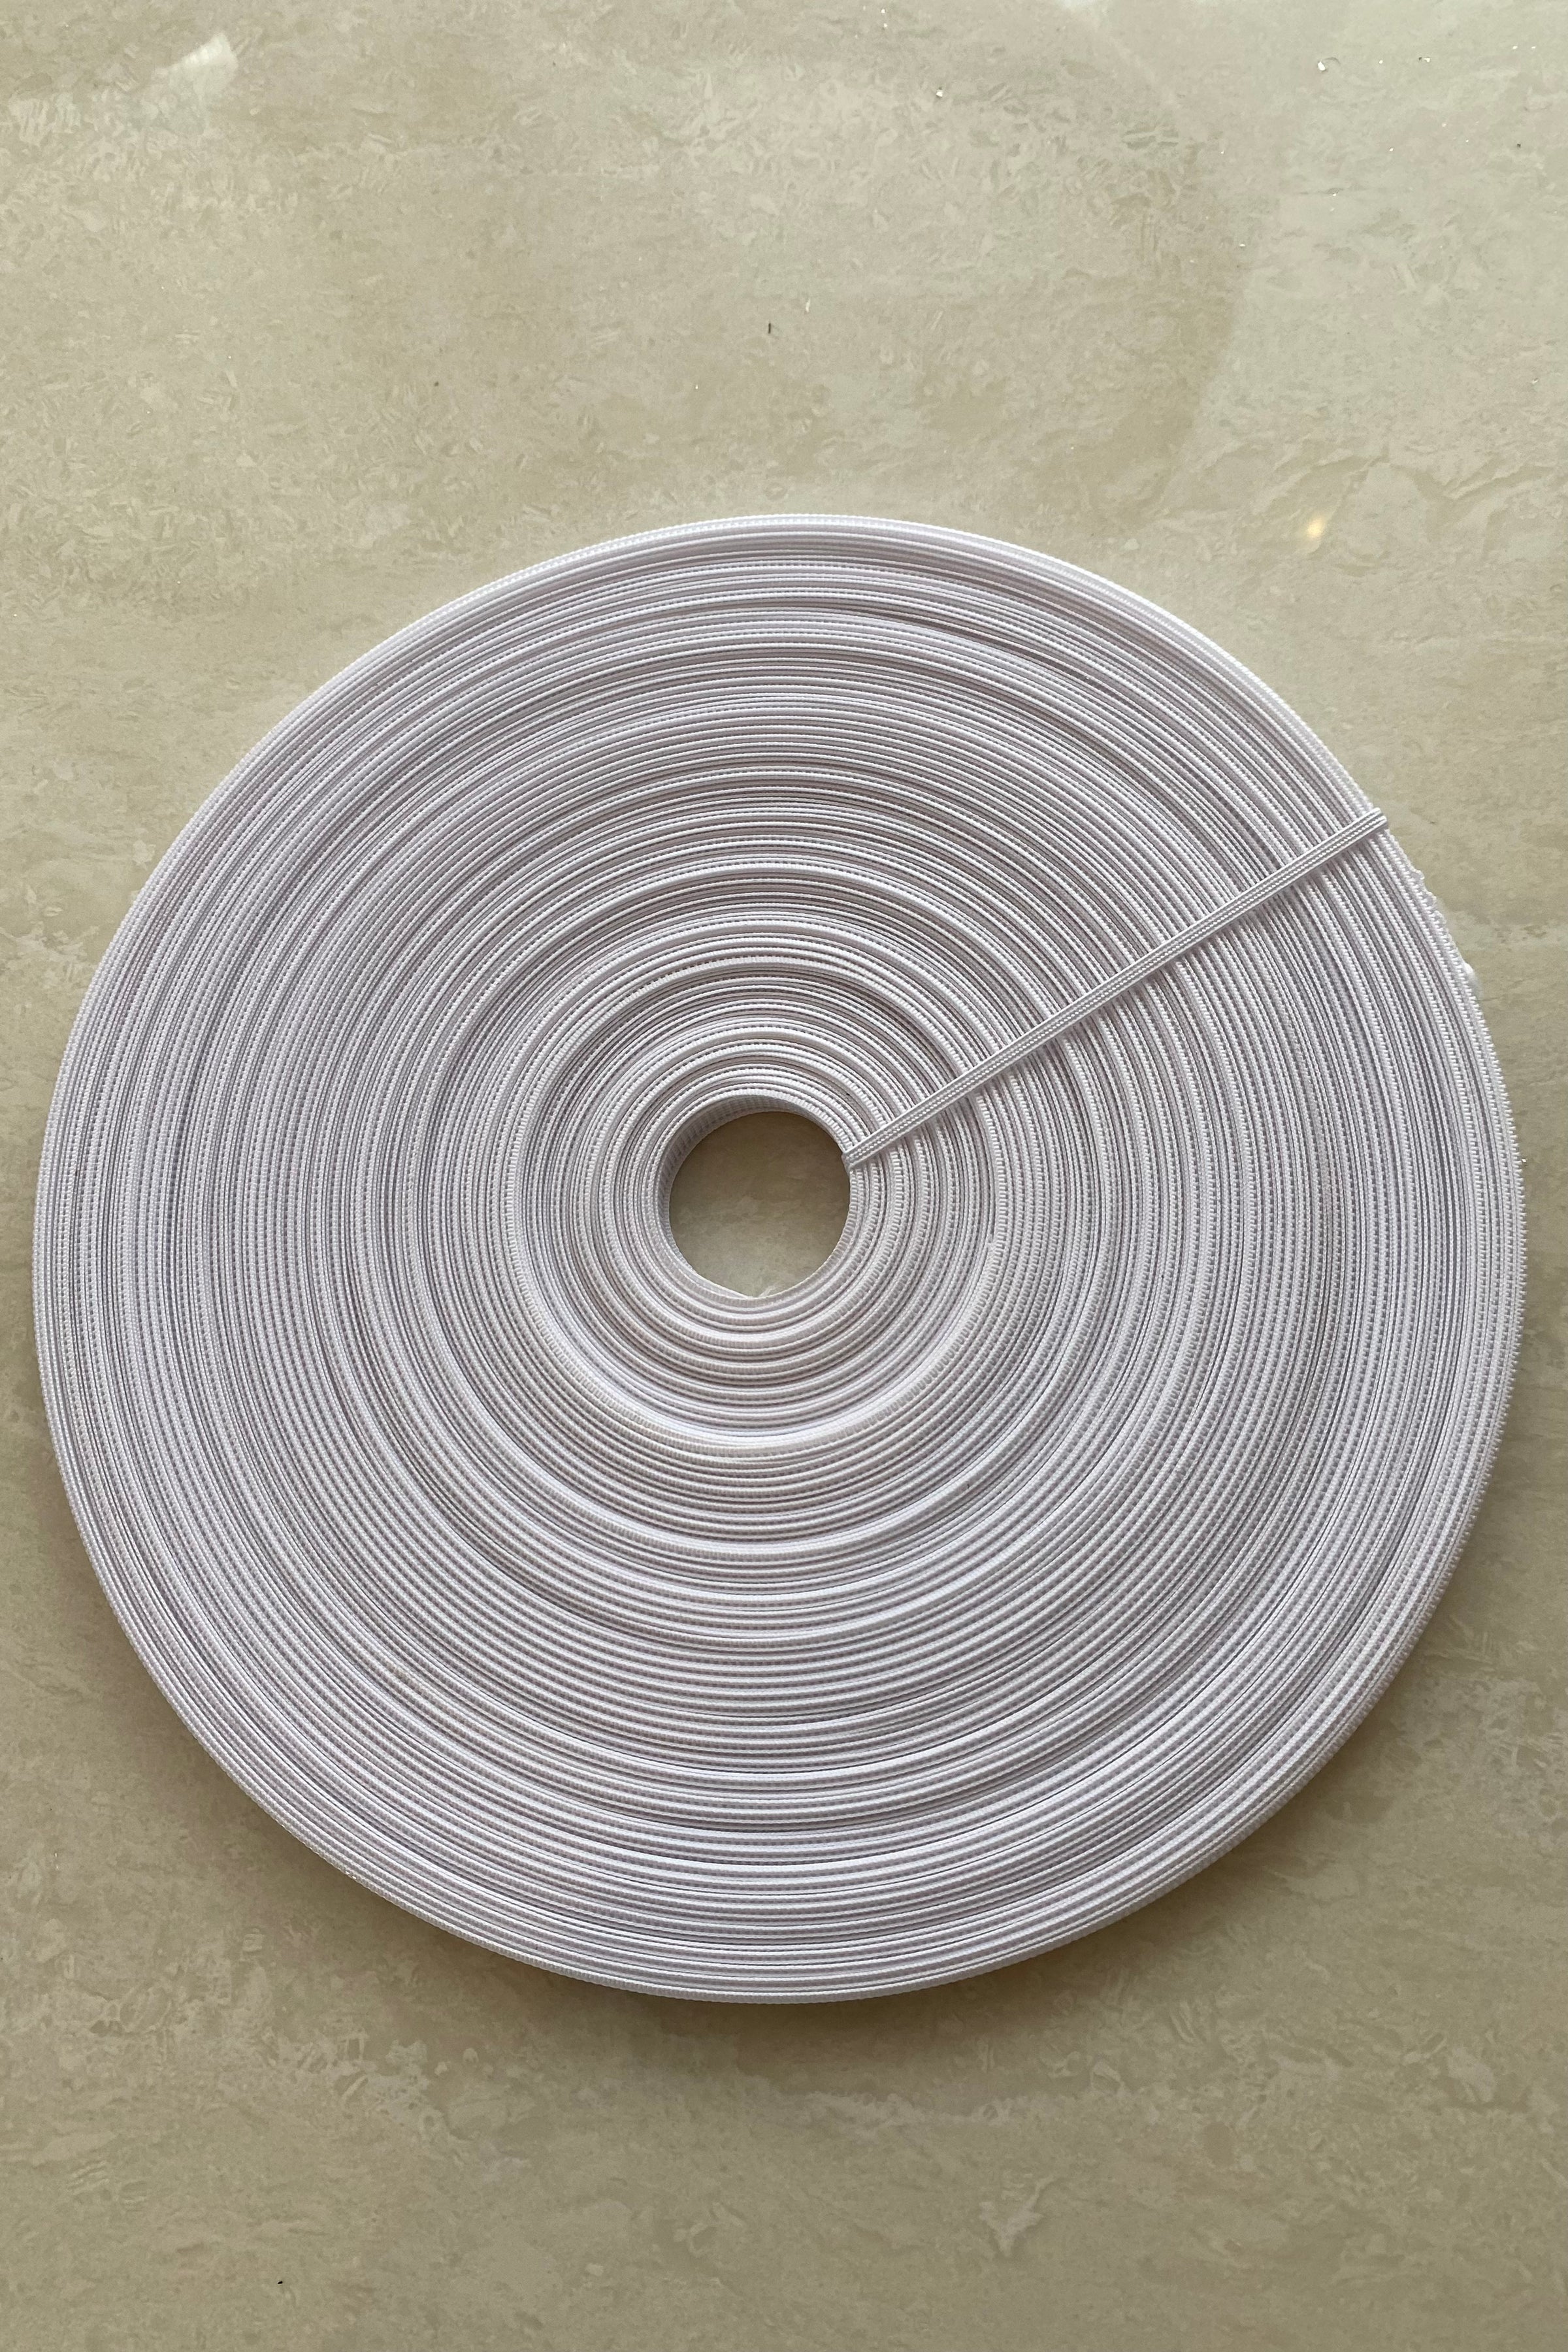 Plastic Sew in Boning - White 6mm, 8mm, 12mm